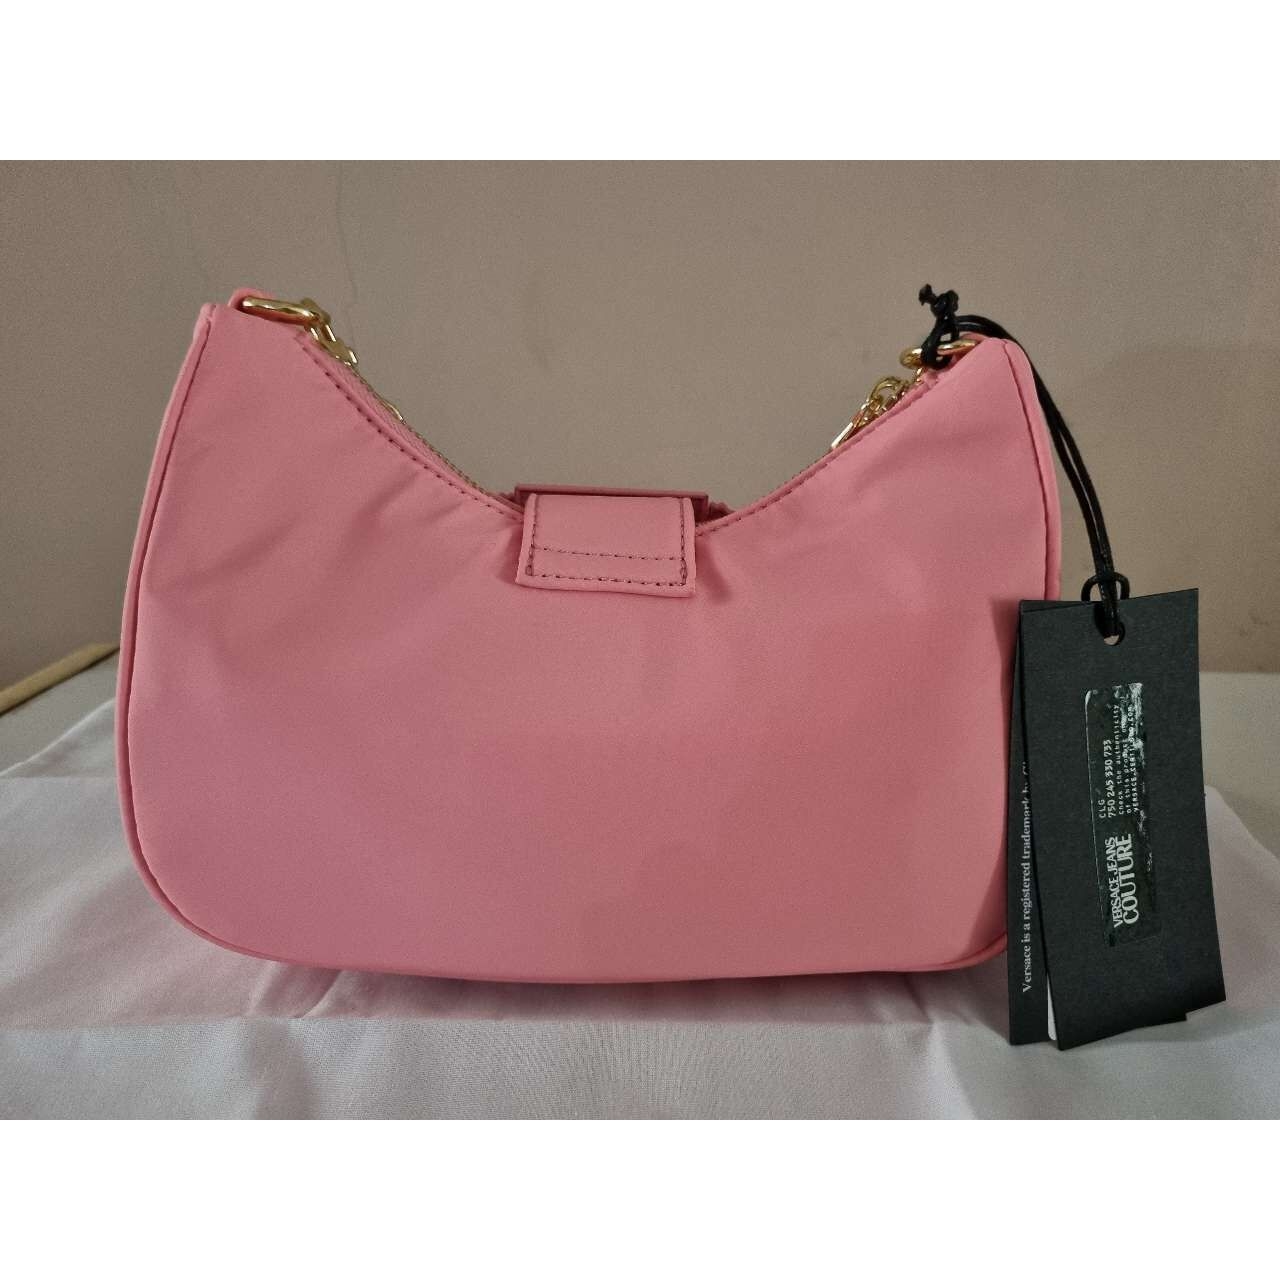 Versace Jeans Couture Pink Shoulder Bag